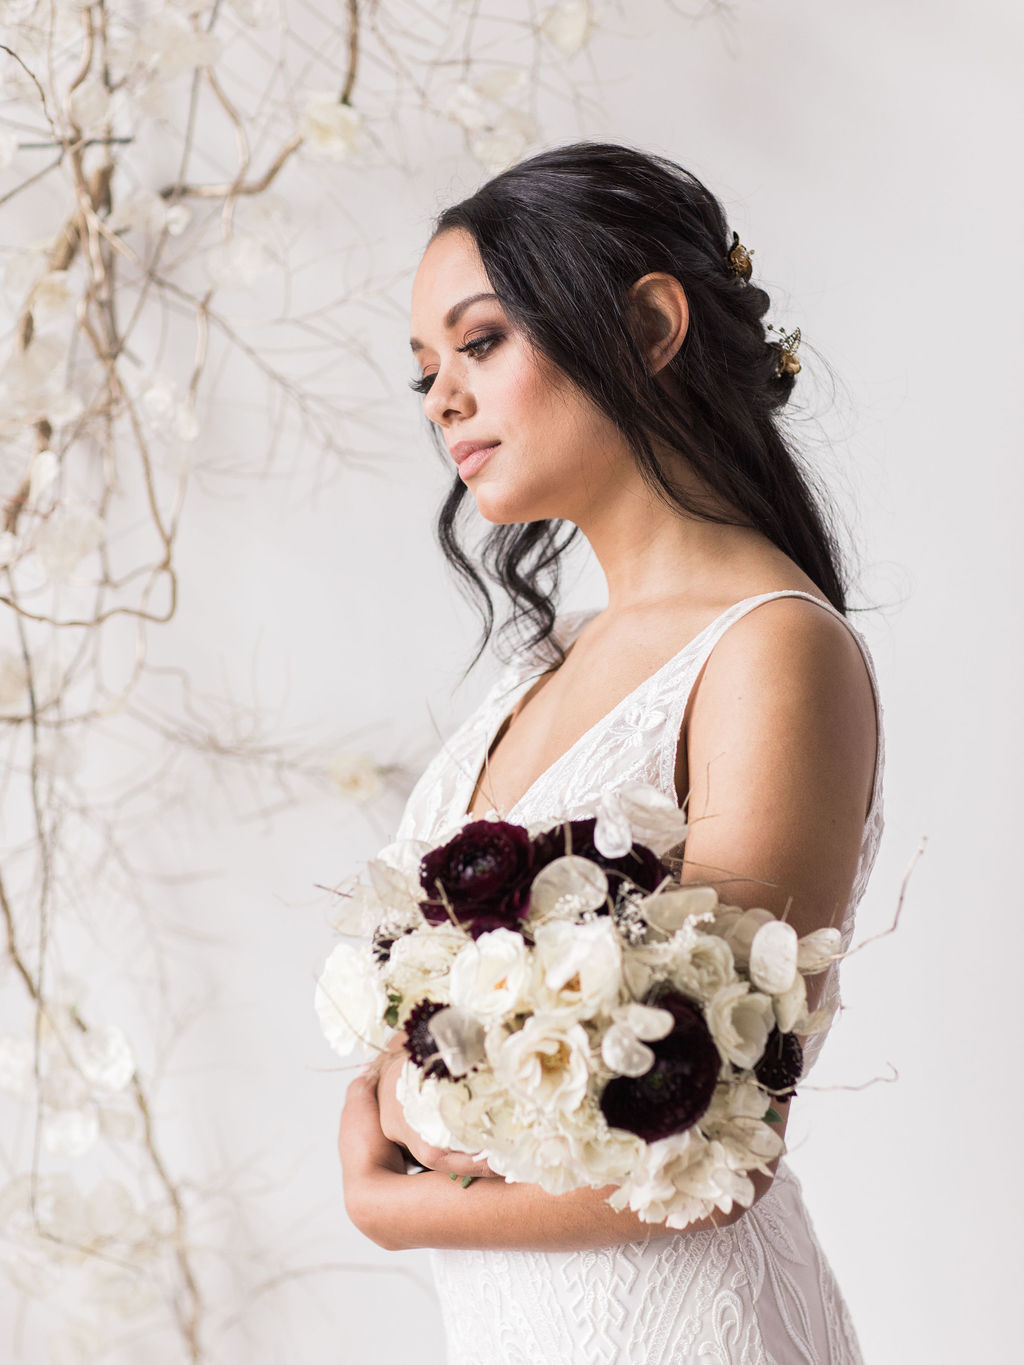 Dark hair bride with floral bouquet wedding spokane